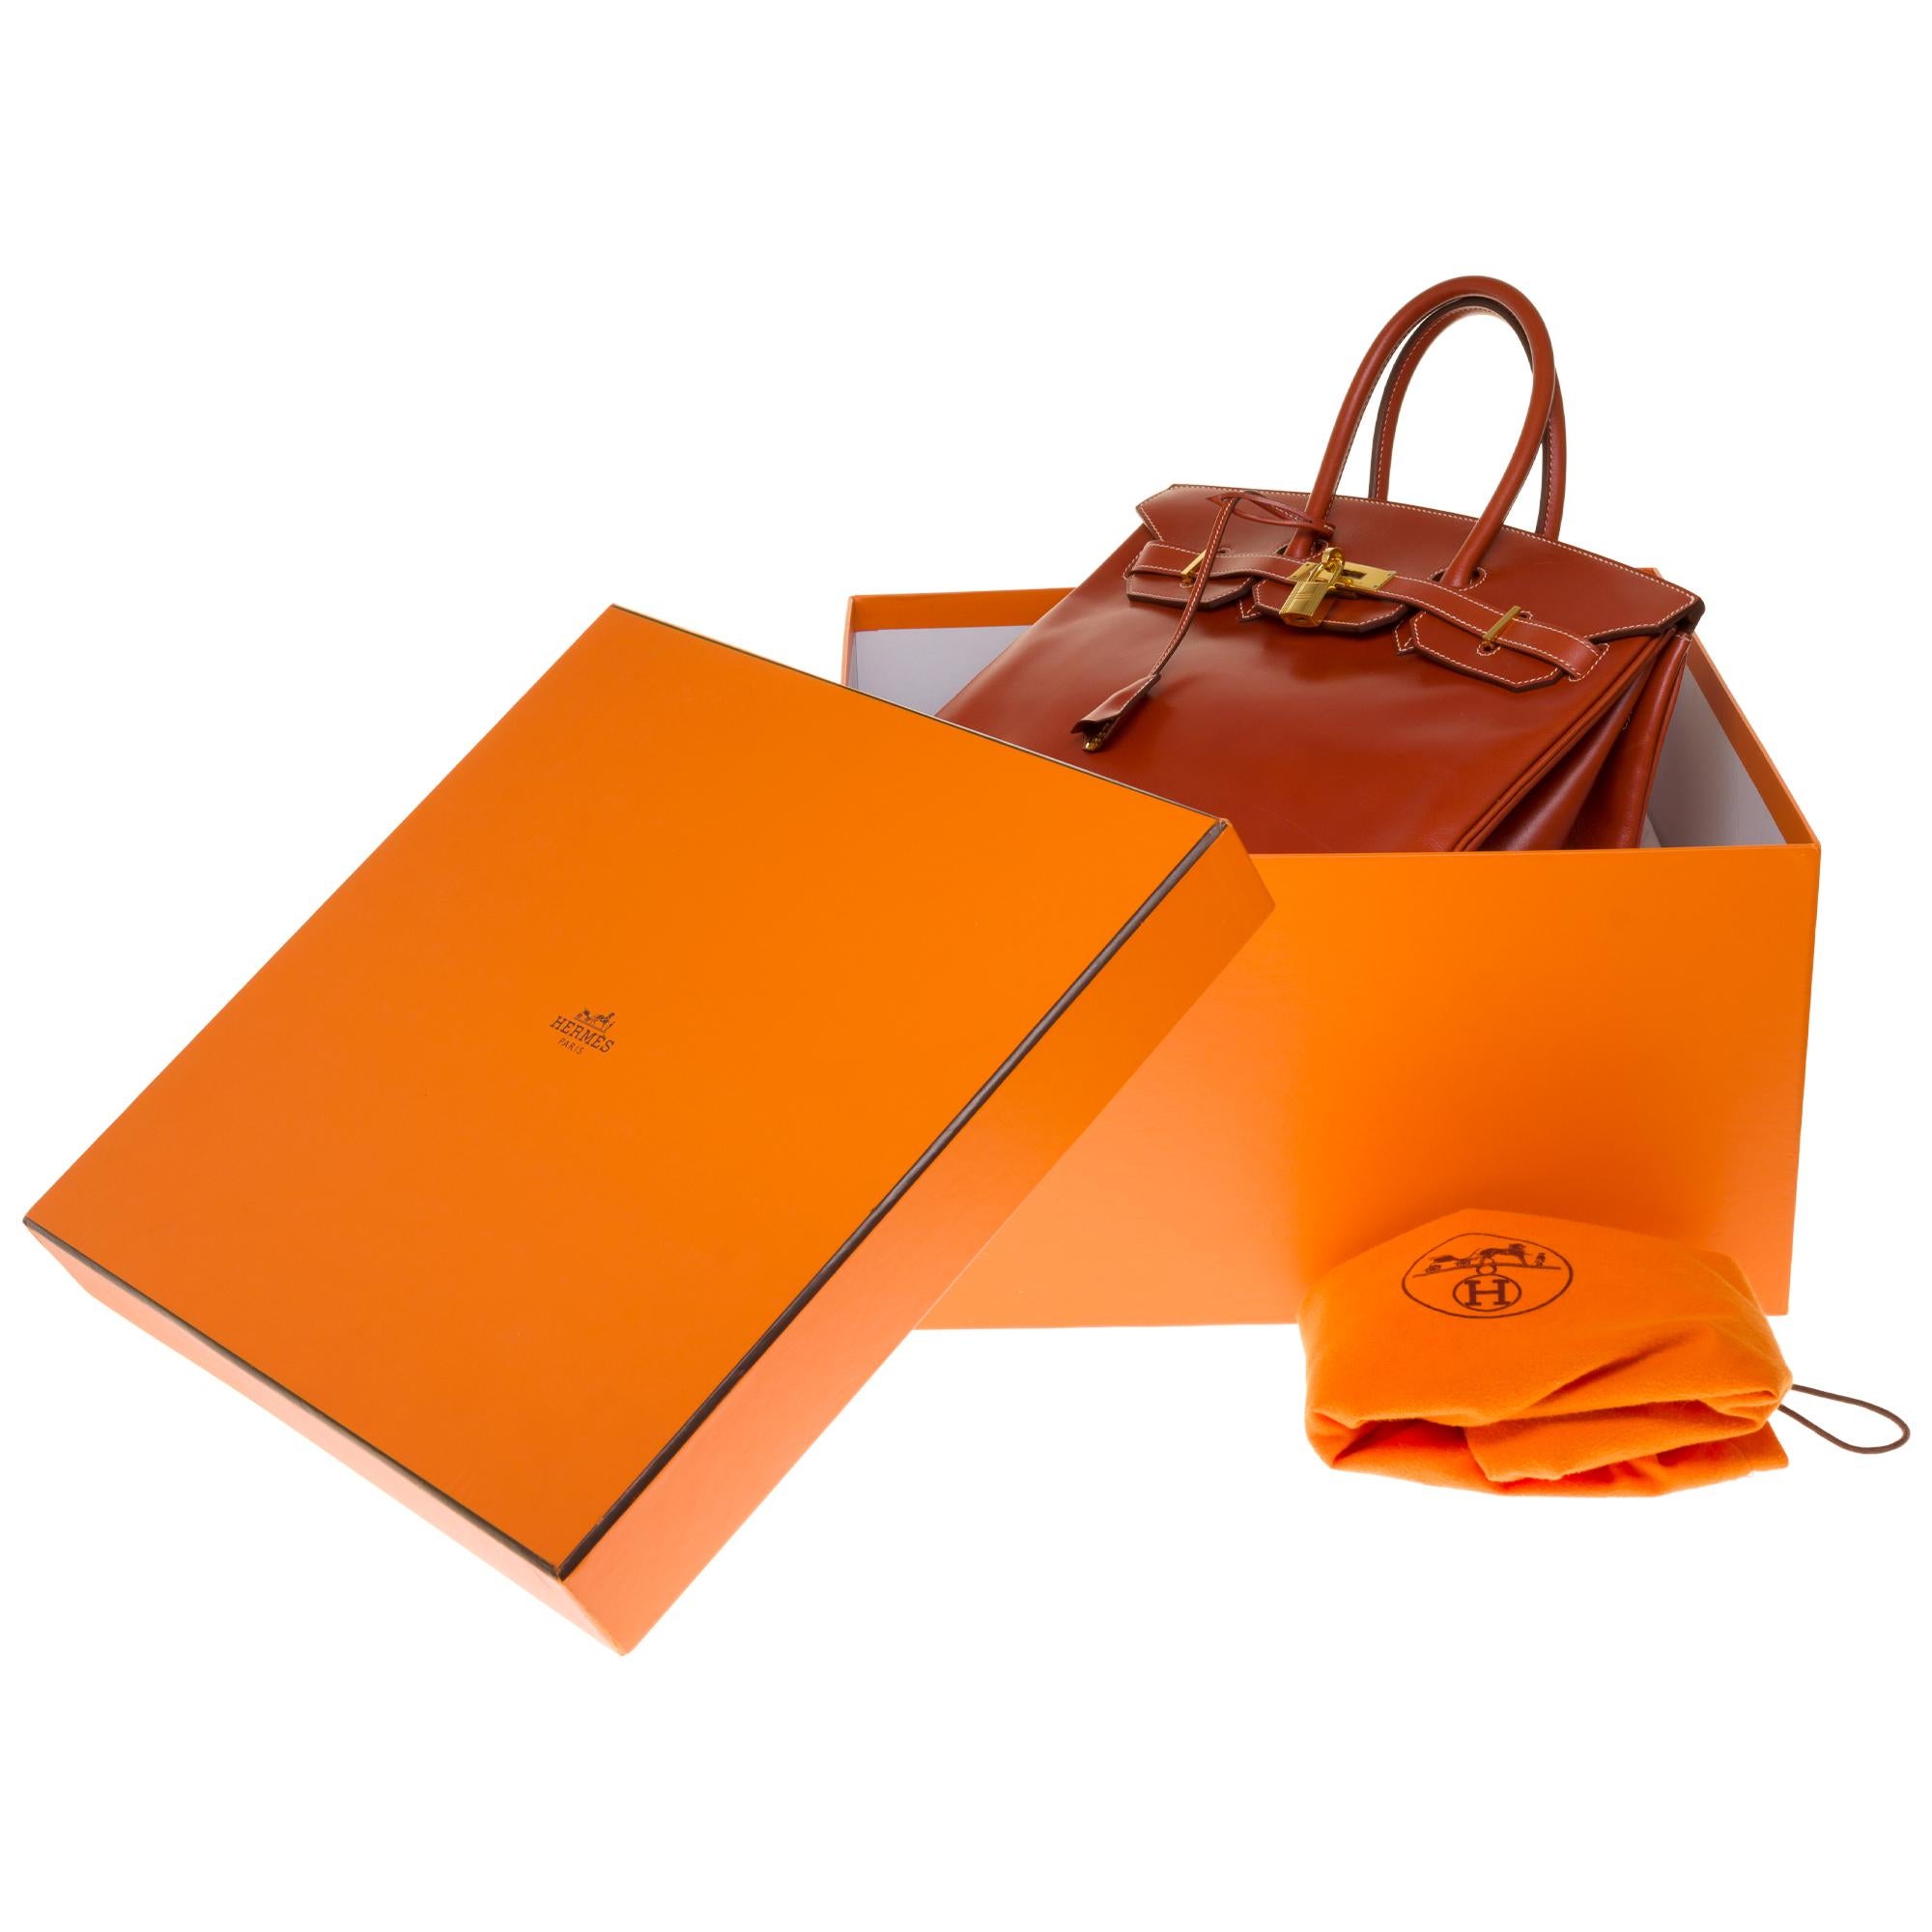 RARE Hermès Birkin 30 handbag in brick box calf leather and gold hardware 4